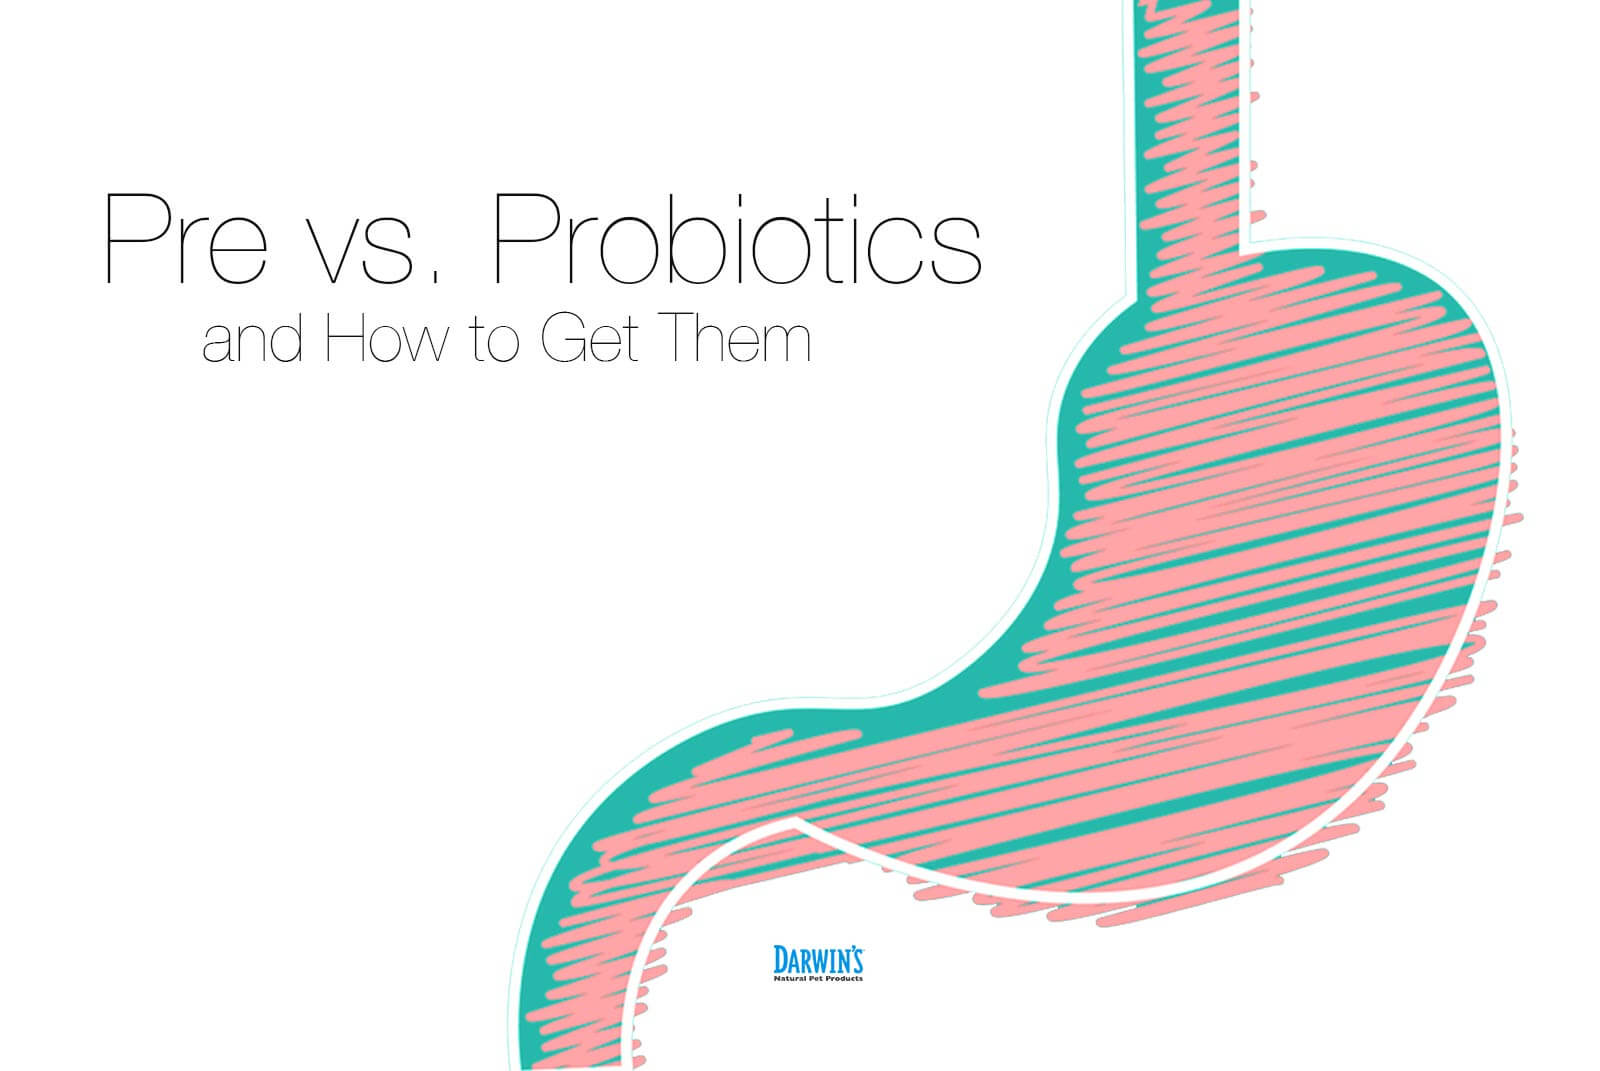 Probiotics & Prebiotics for Dogs